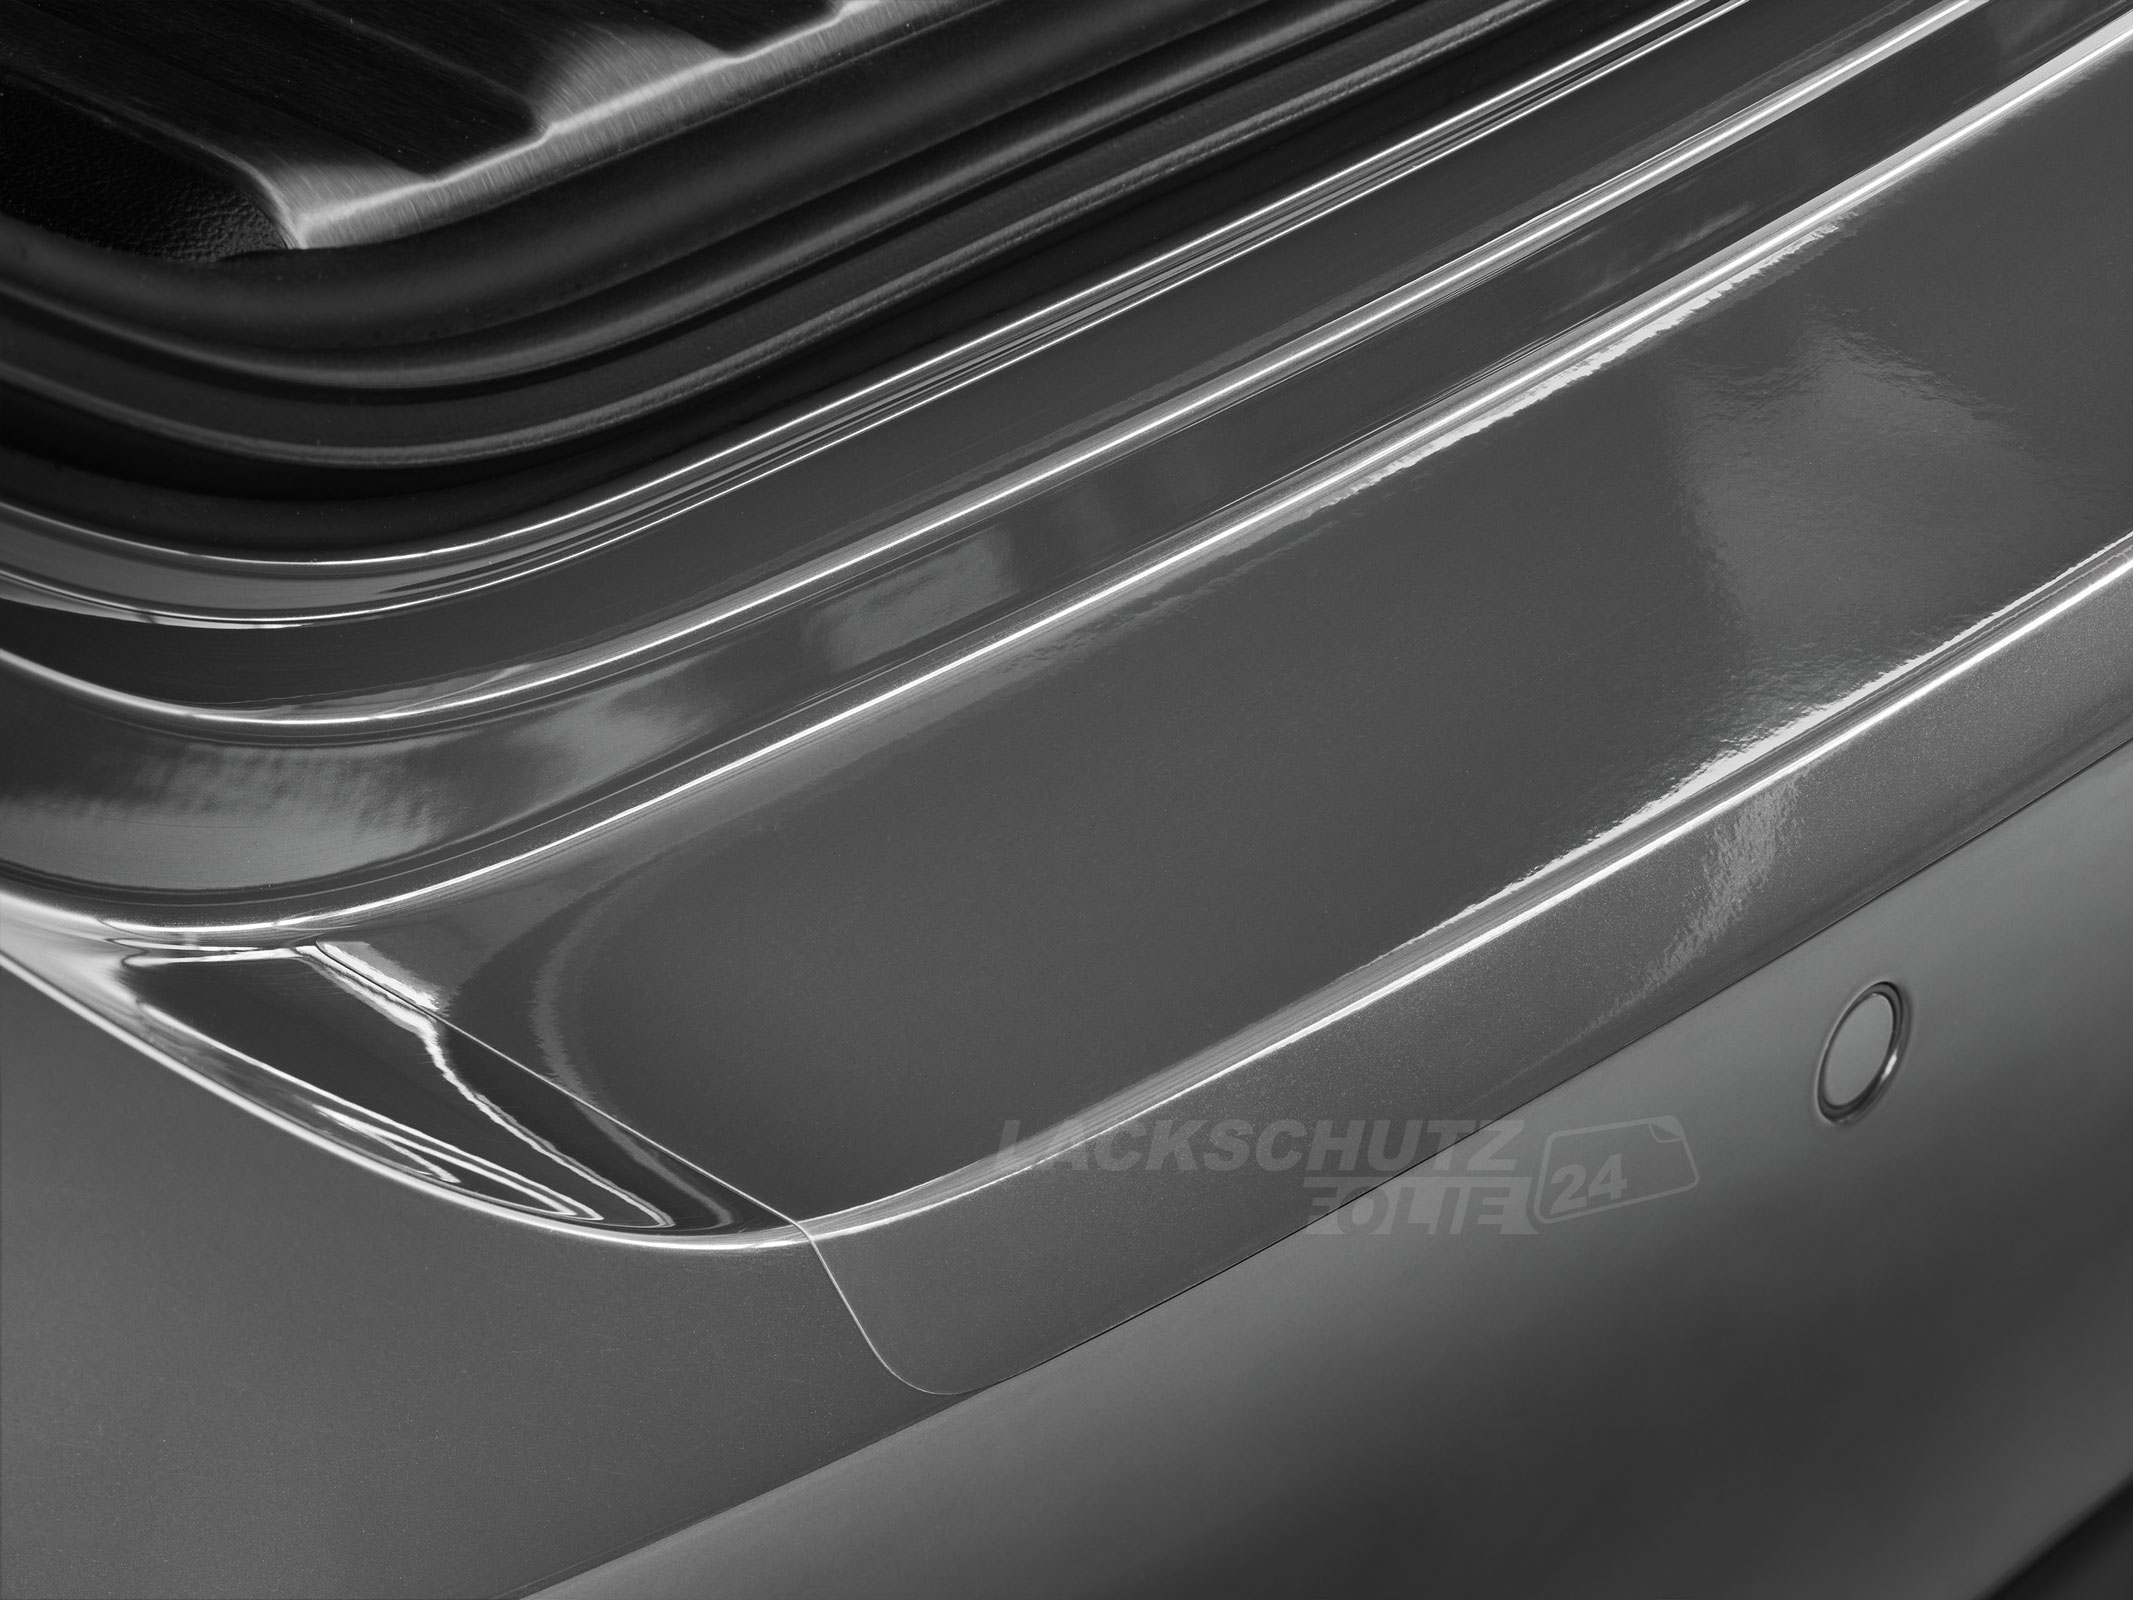 Ladekantenschutzfolie - Transparent Glatt Hochglänzend 240 µm stark für Audi A7 Sportback Typ C8, ab BJ 02/2018